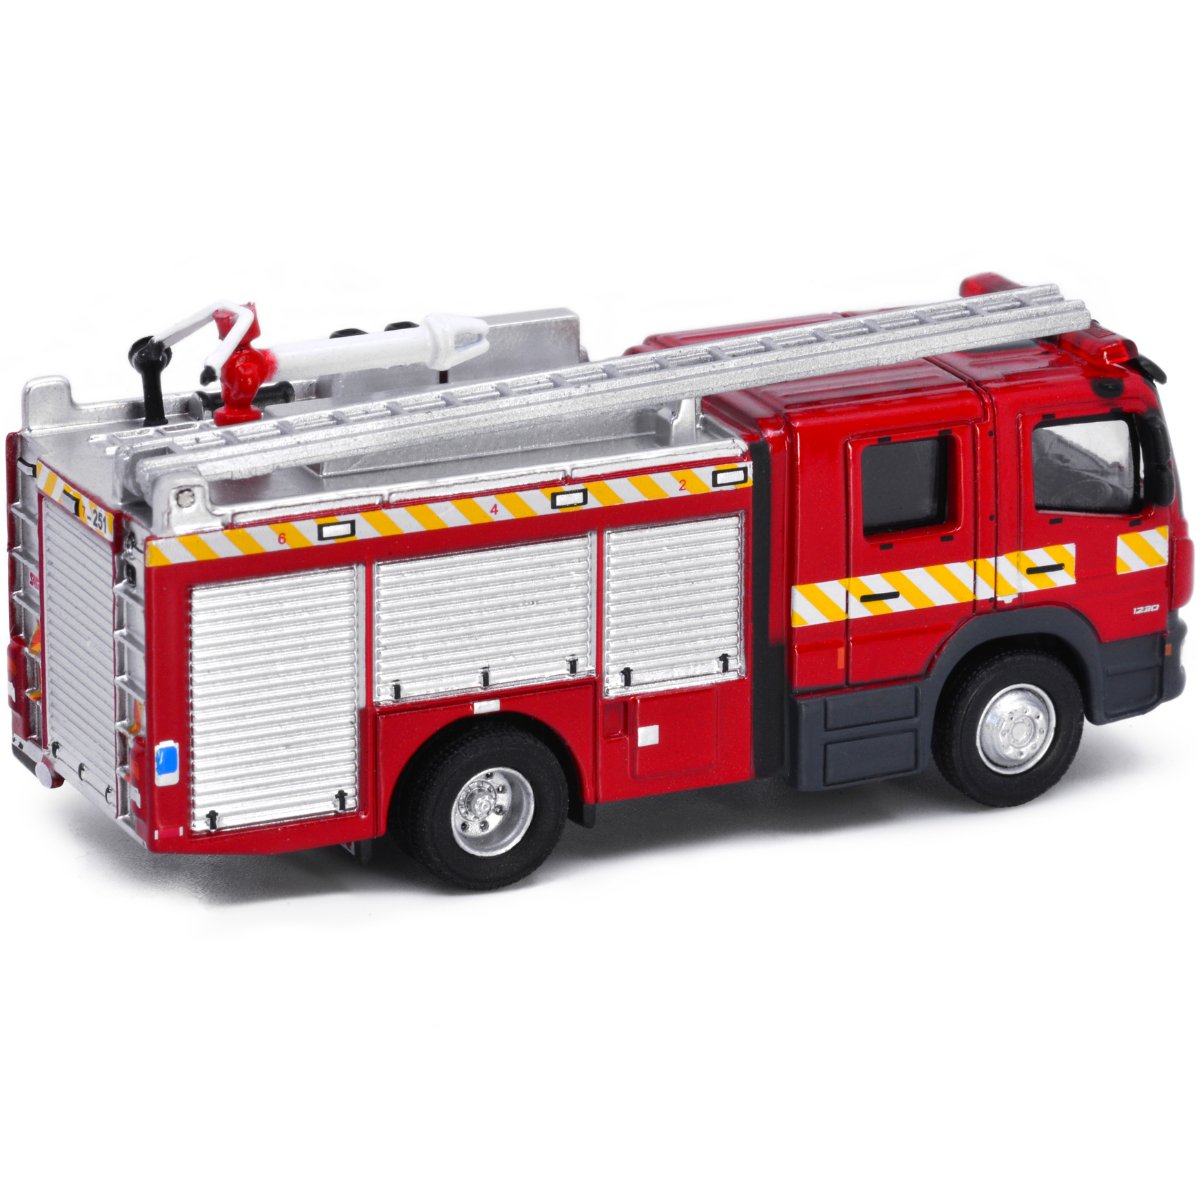 Tiny Models Mercedes Atego Macau Fire Engine Major Pump (1:87 Scale) - Phillips Hobbies